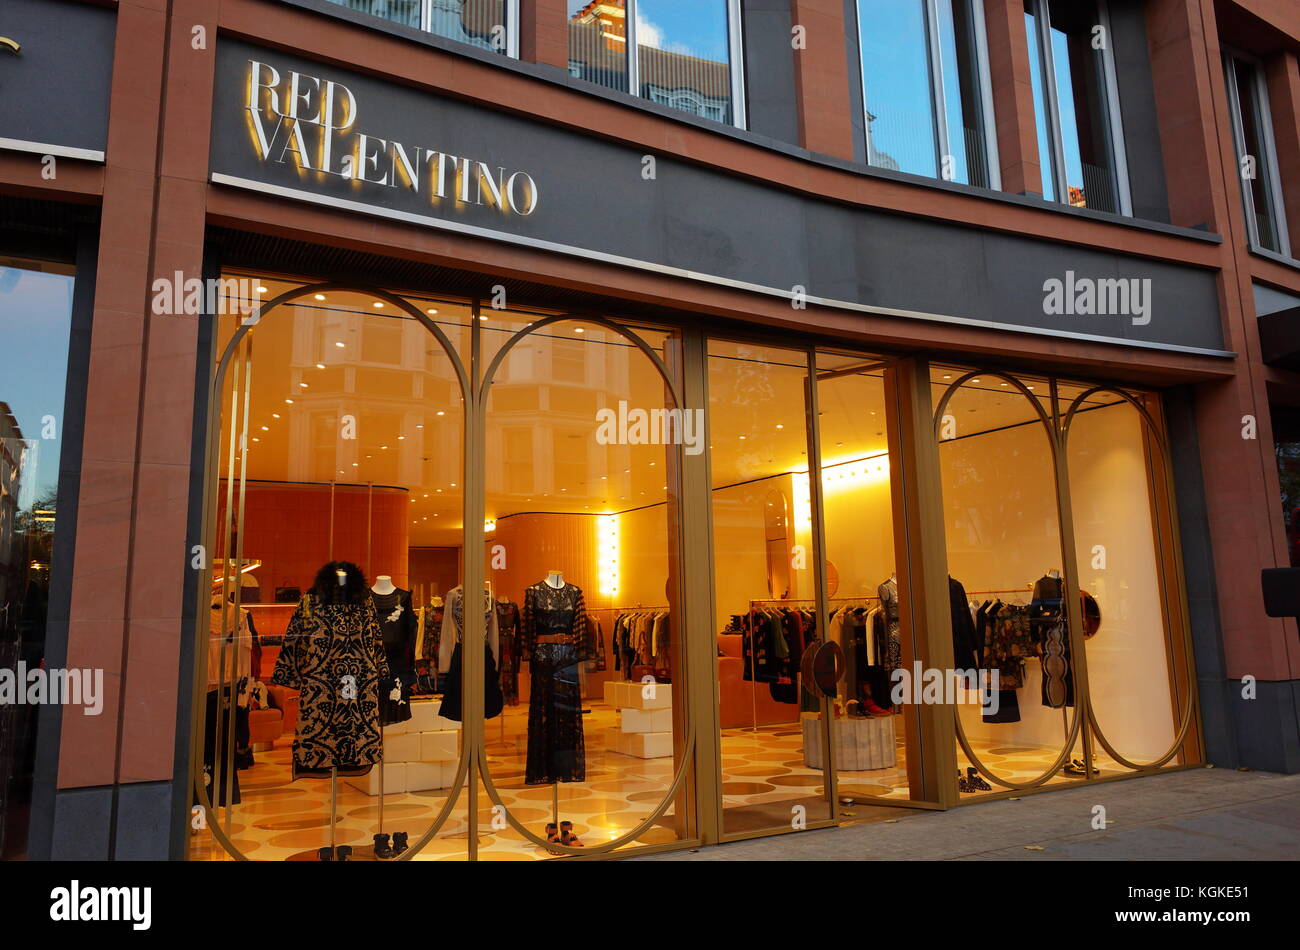 Red Valentino store on Sloane street, London, England Stock Photo Alamy